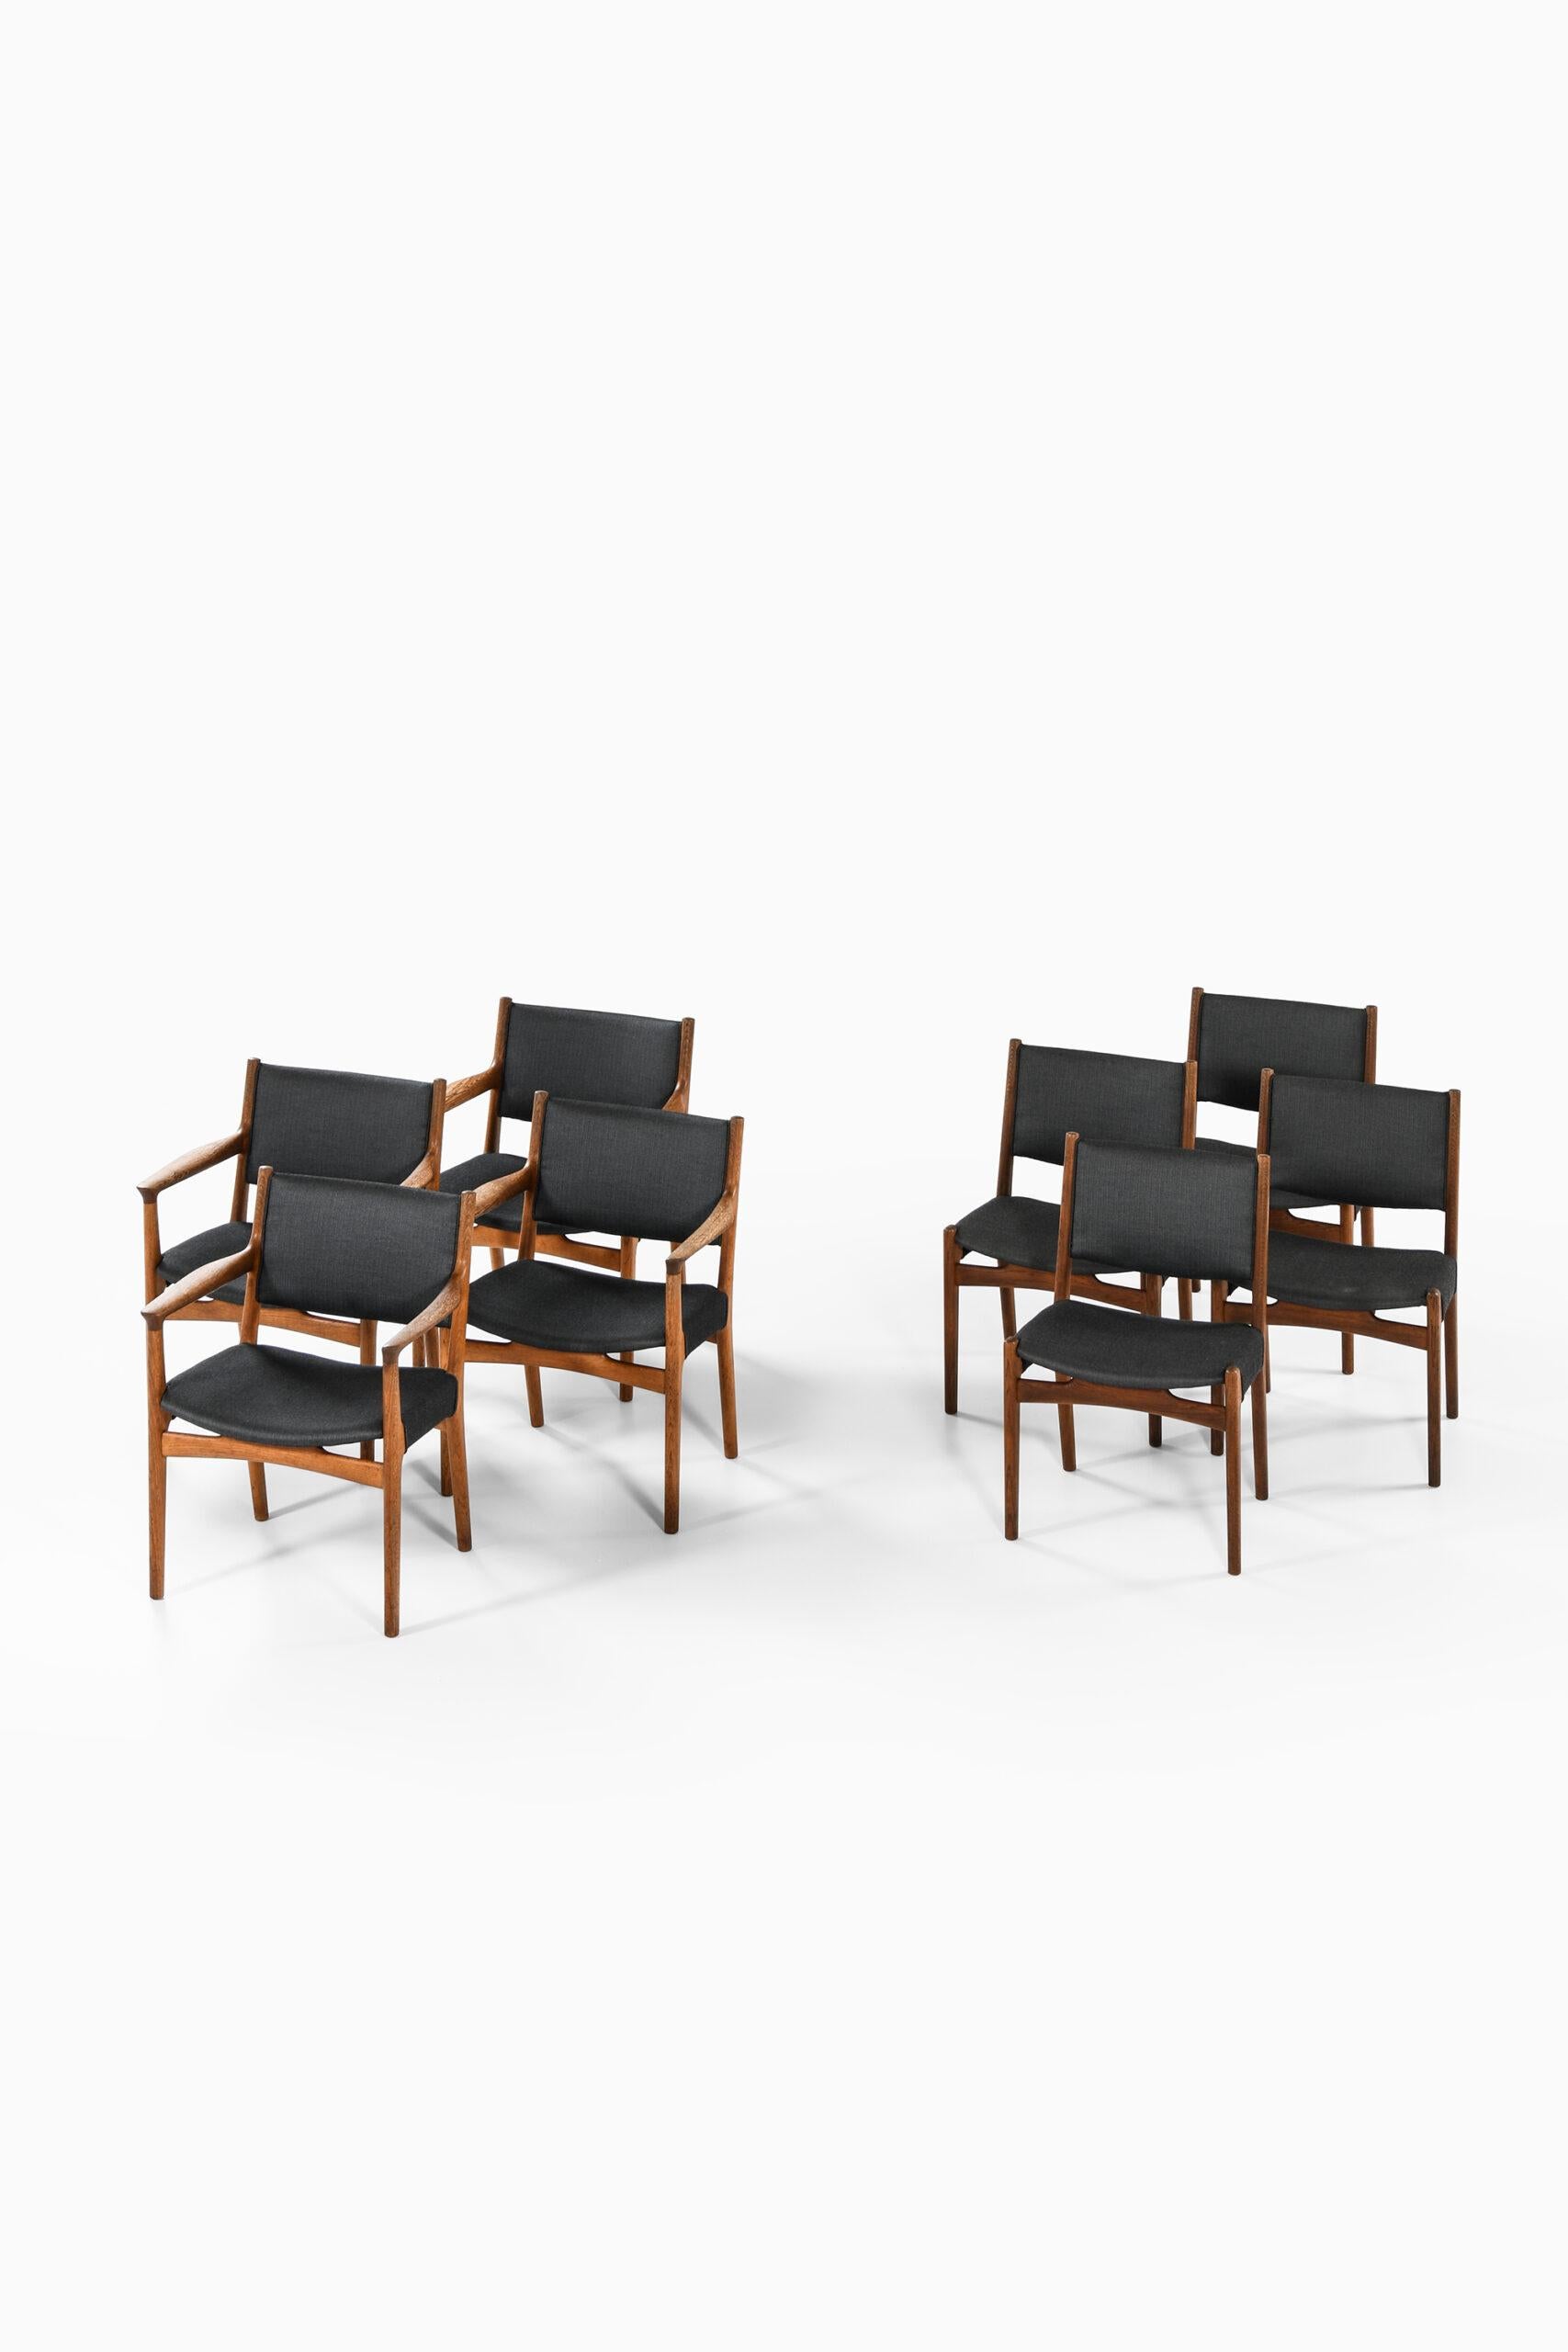 Hans Wegner Dining Chairs by Cabinetmaker Johannes Hansen in Denmark In Good Condition For Sale In Limhamn, Skåne län